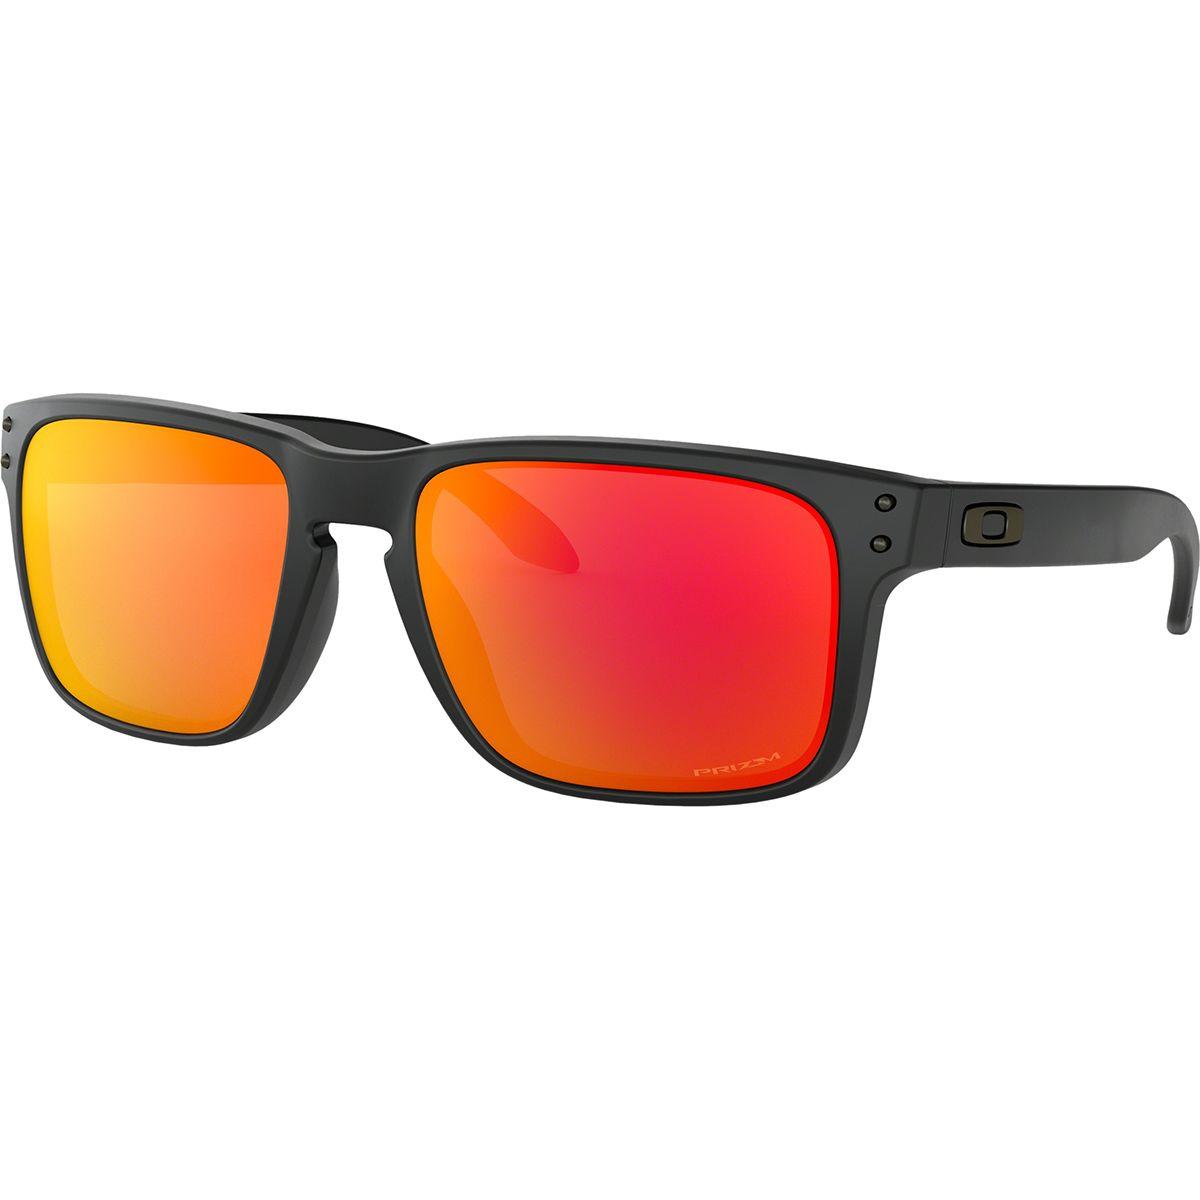 Oakley Holbrook Prizm Sunglasses in Red for Men - Lyst